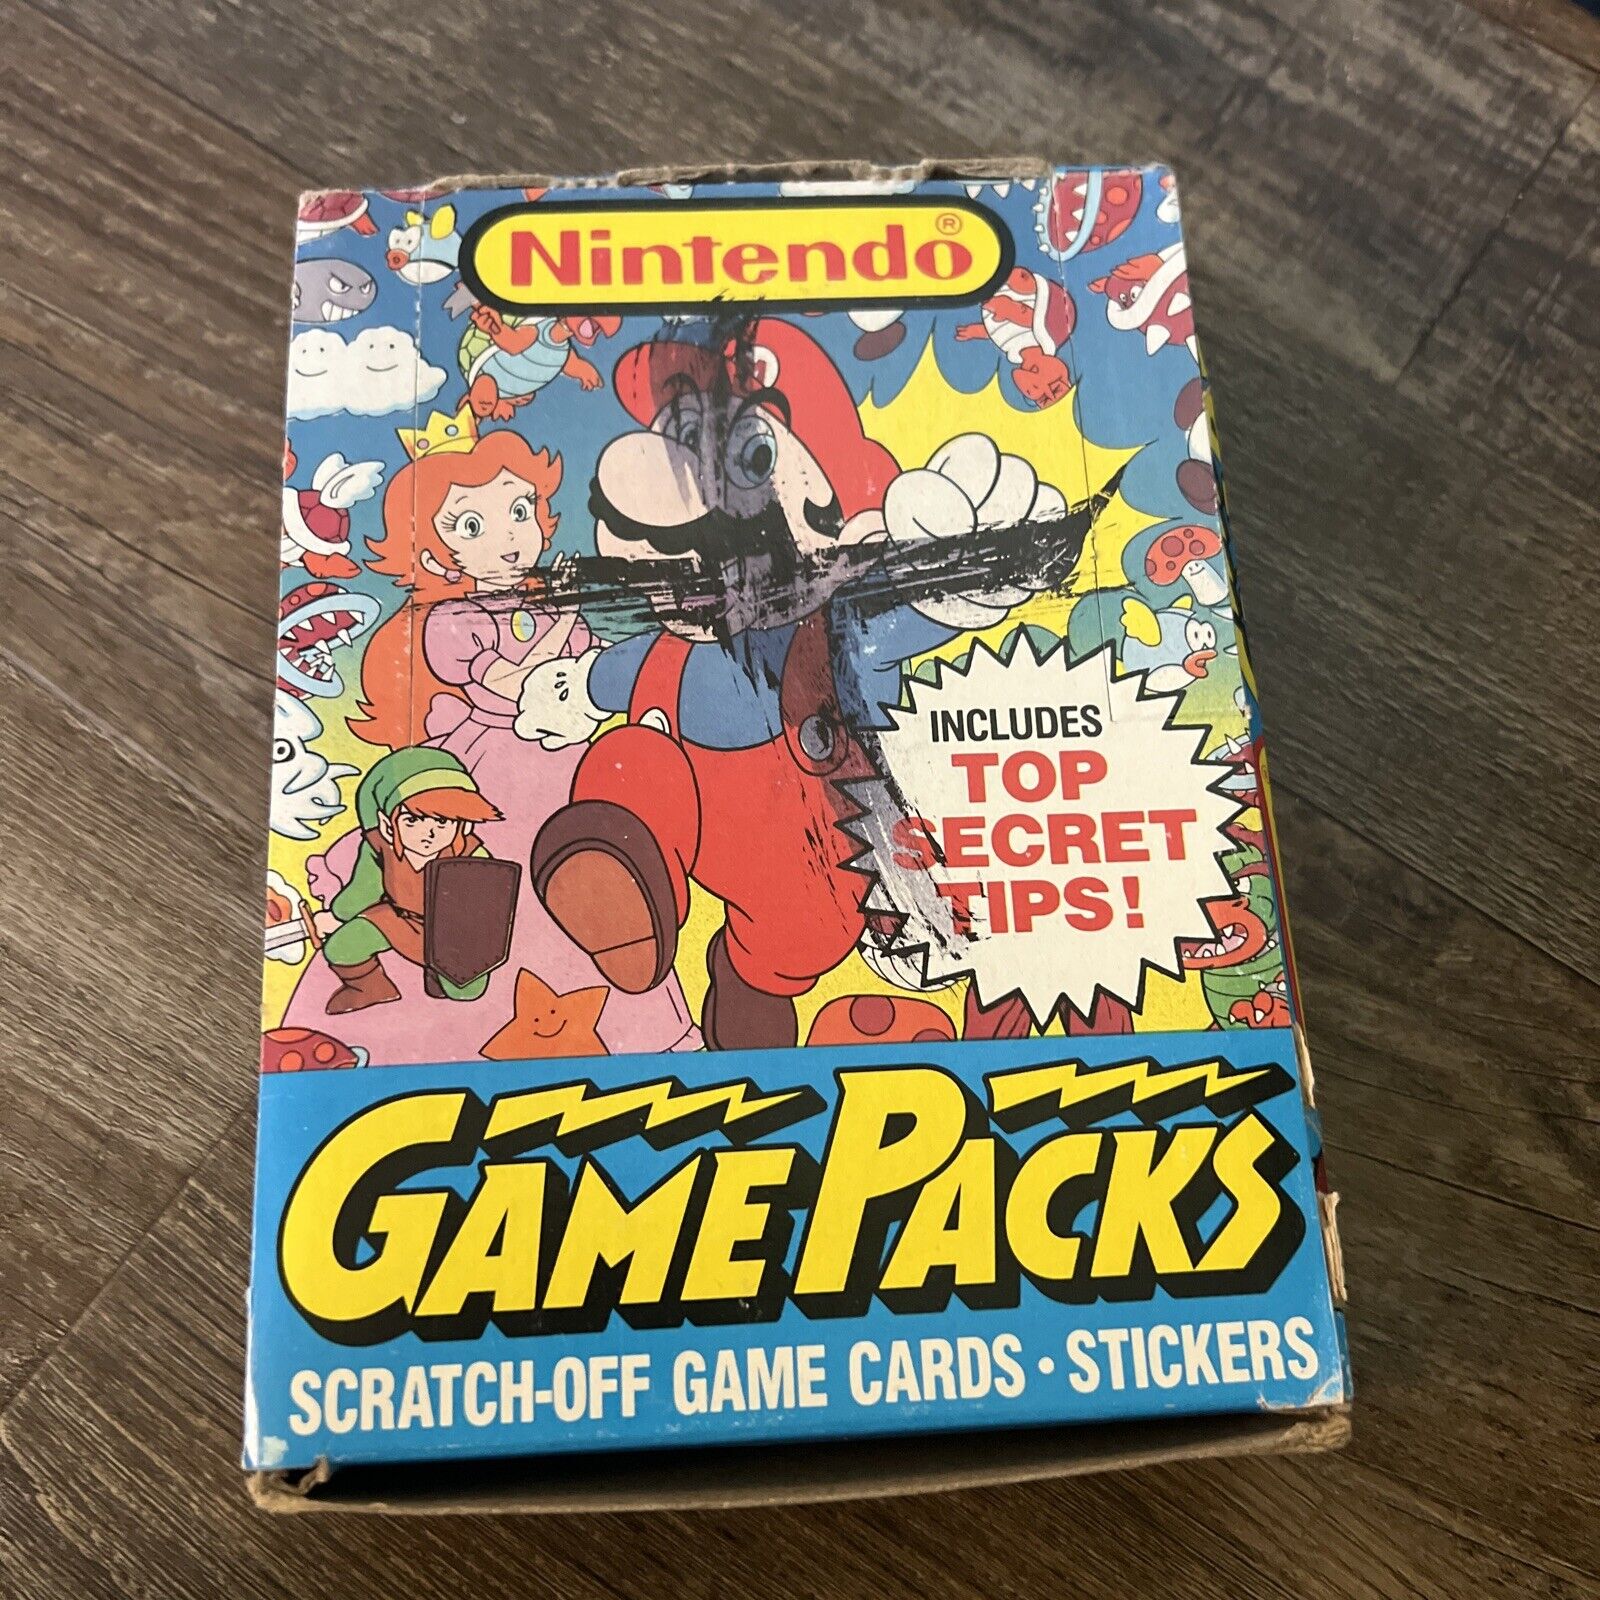 NOS 1989 Topps Nintendo Game Packs Wax Box Unopened 48 Sealed Card Packs Mario +